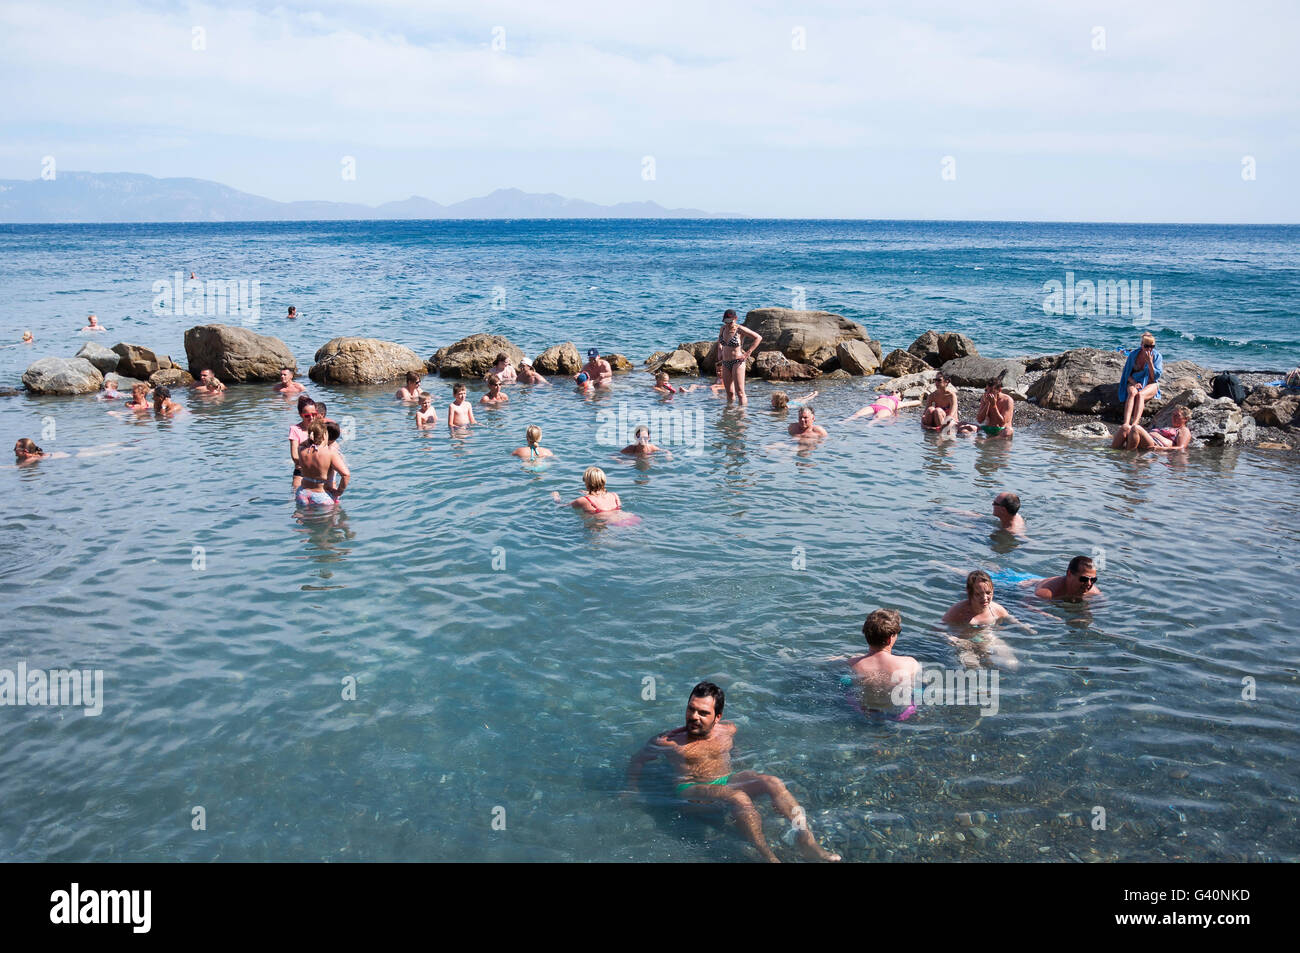 Therma Hot Springs, Therma Beach, Agios Fokas, Kos (Cos), The Dodecanese, South Aegean Region, Greece Stock Photo